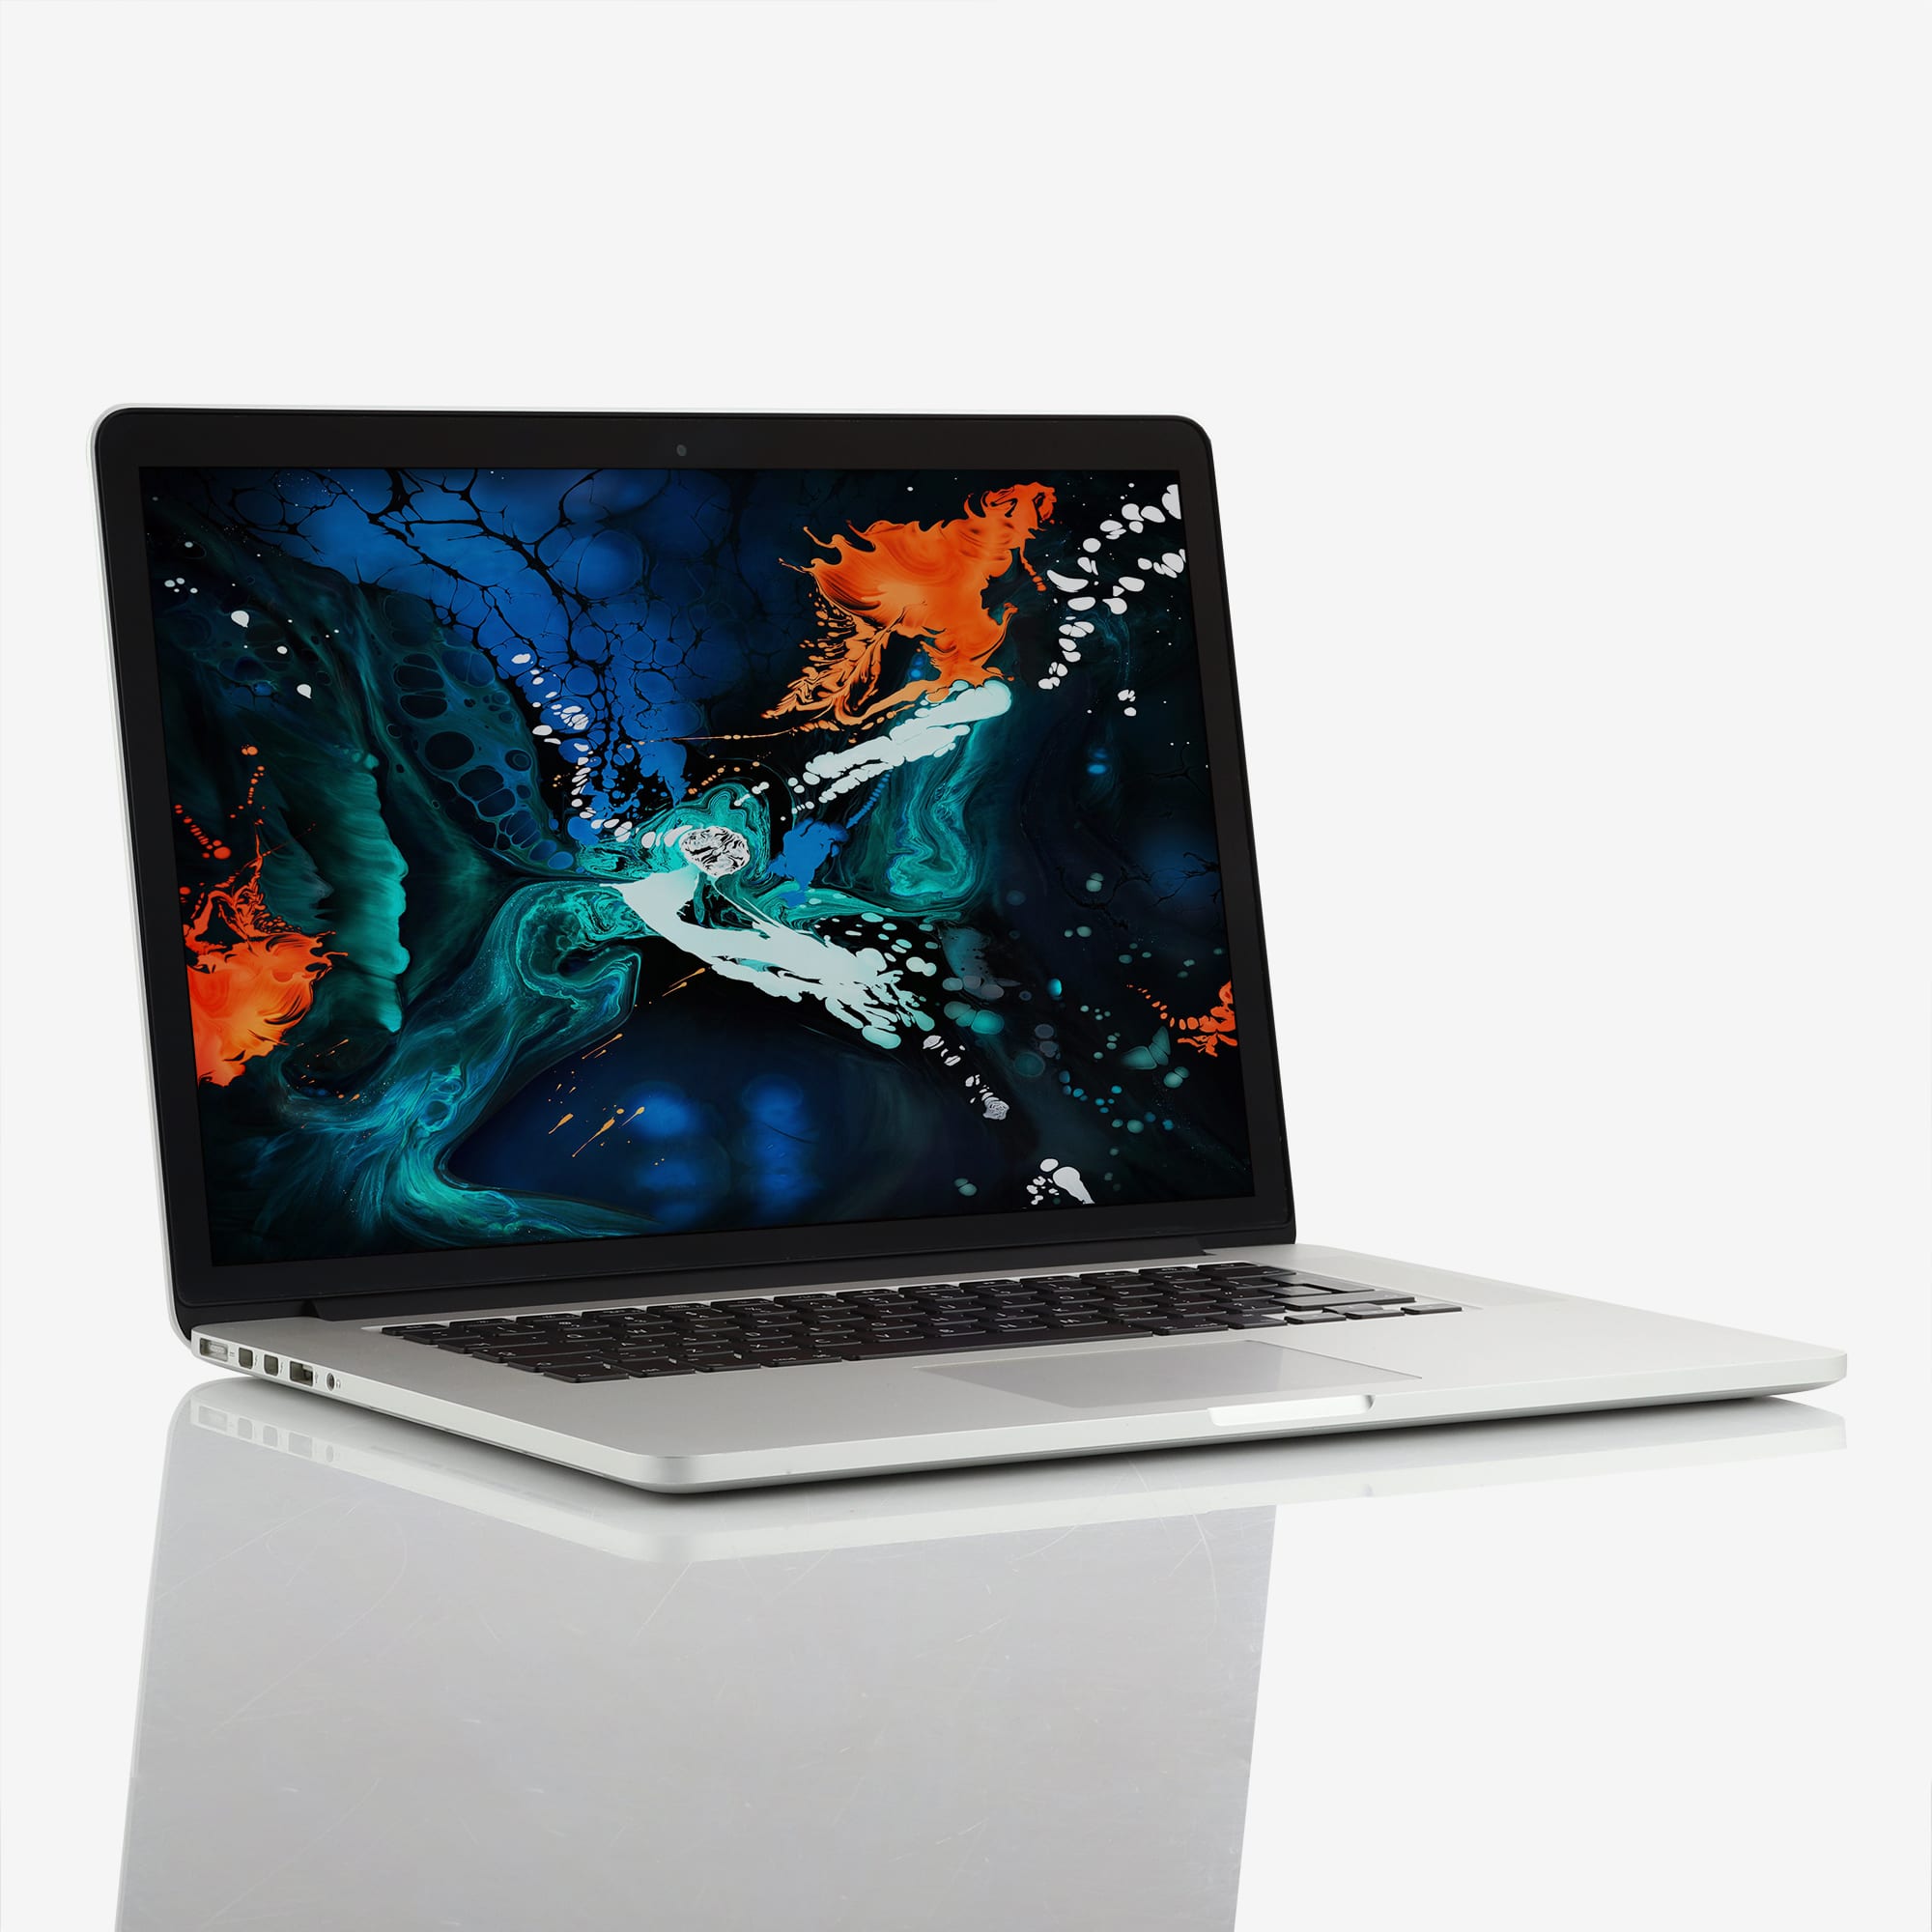 1 x Apple MacBook Pro Retina 15 Inch Intel Core i7 2.00 GHz (2013)